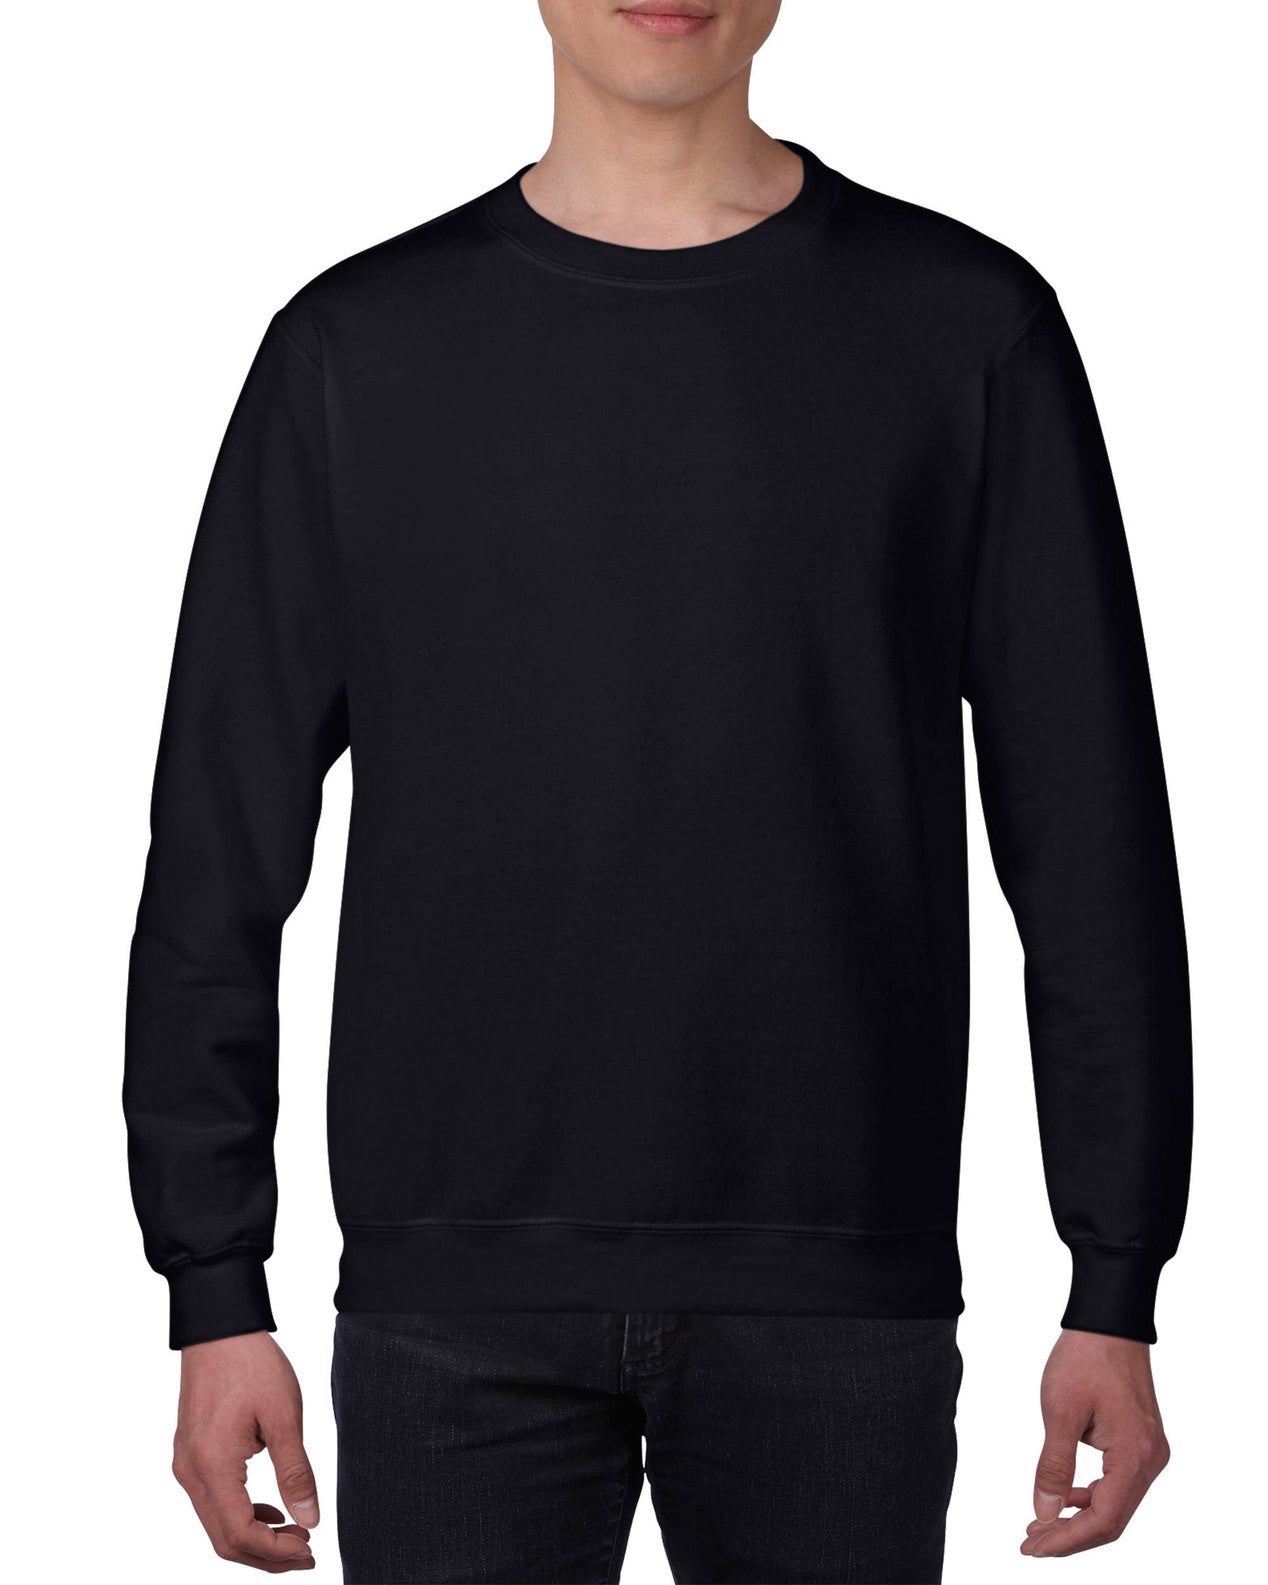 Gildan 88000 - Heavy Blend - Adult Crewneck Sweatshirt